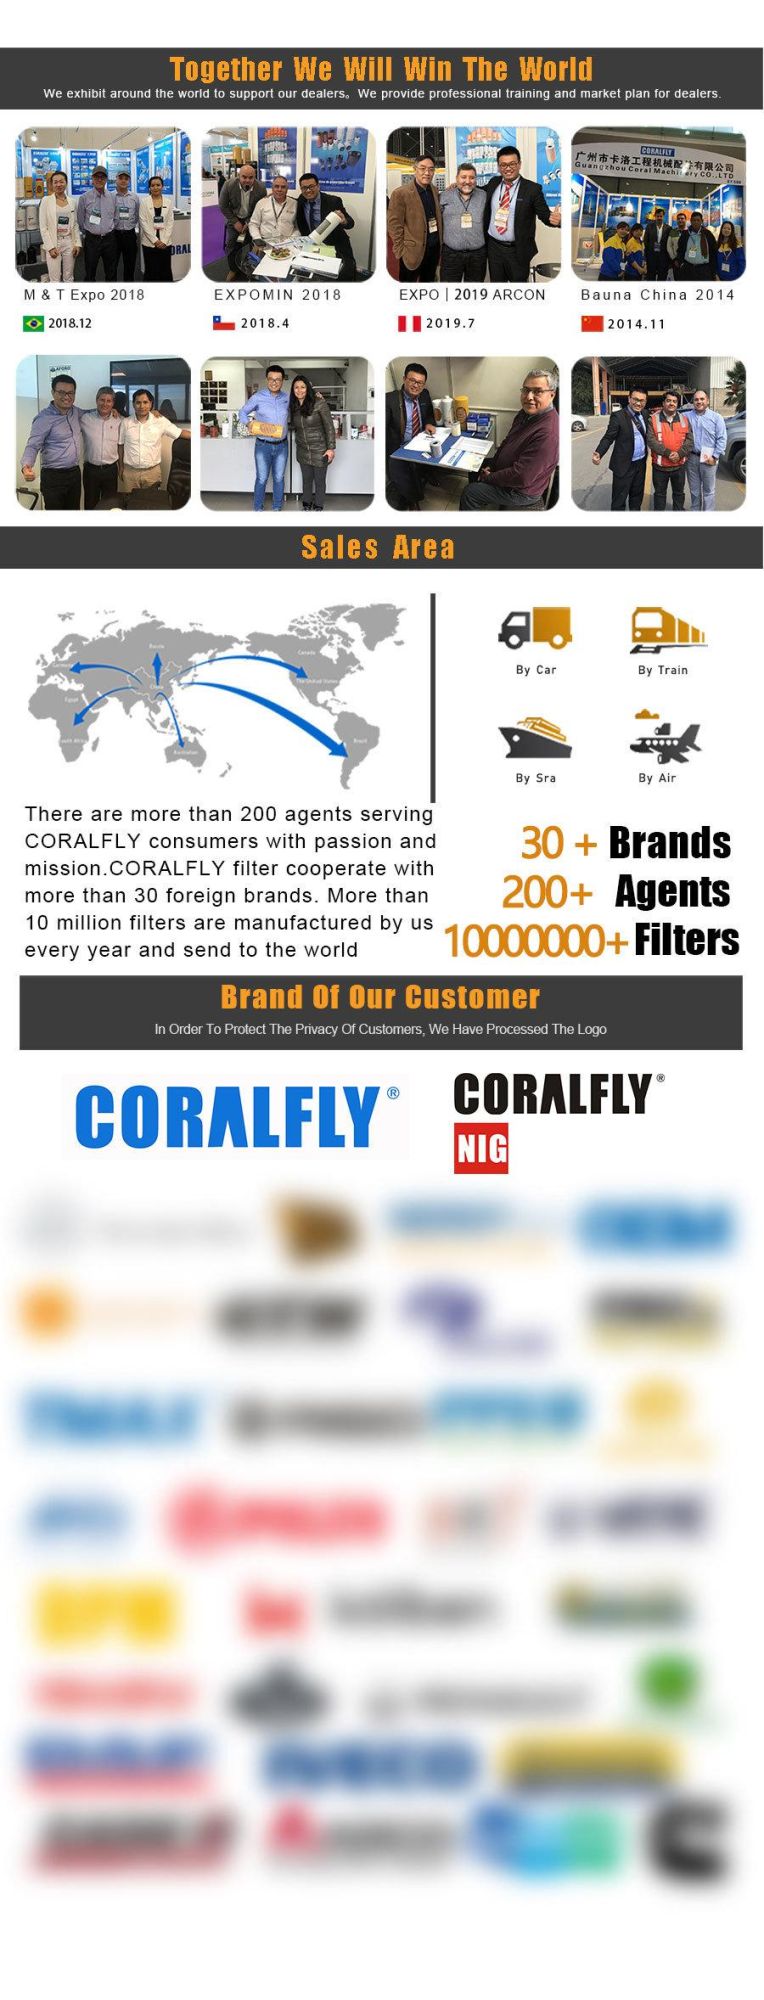 Coralfly Air Filter Me063130 31230-33200 Af4903 P18-2177 P81-1318 AC7480 for Mitsubishi/Donaldson/Micro/Fleetguard